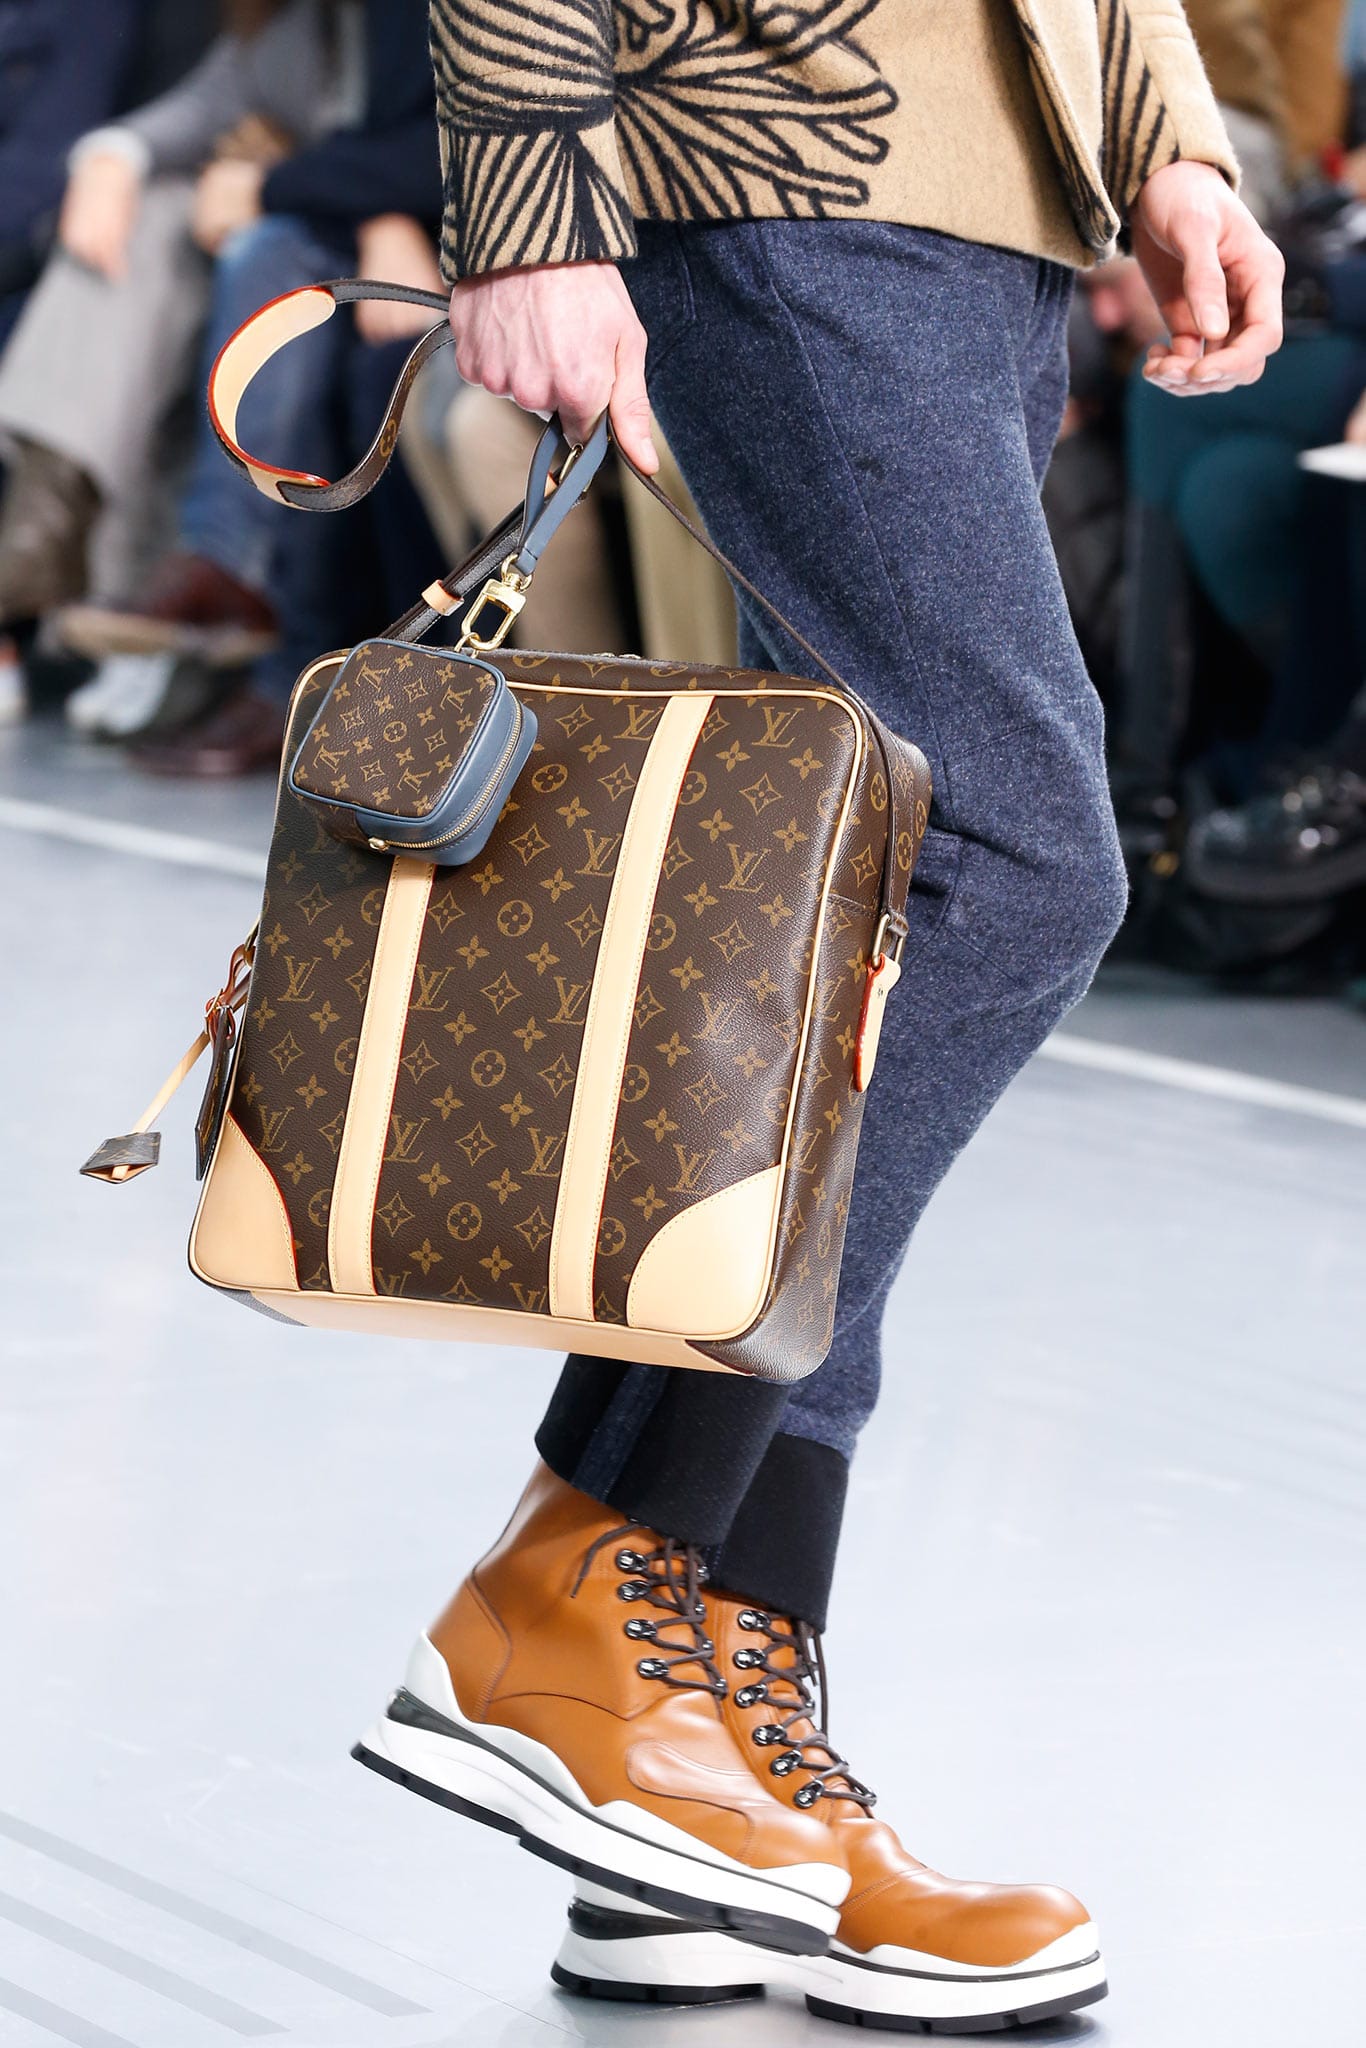 Louis Vuitton Bag Outfit Styles For Men